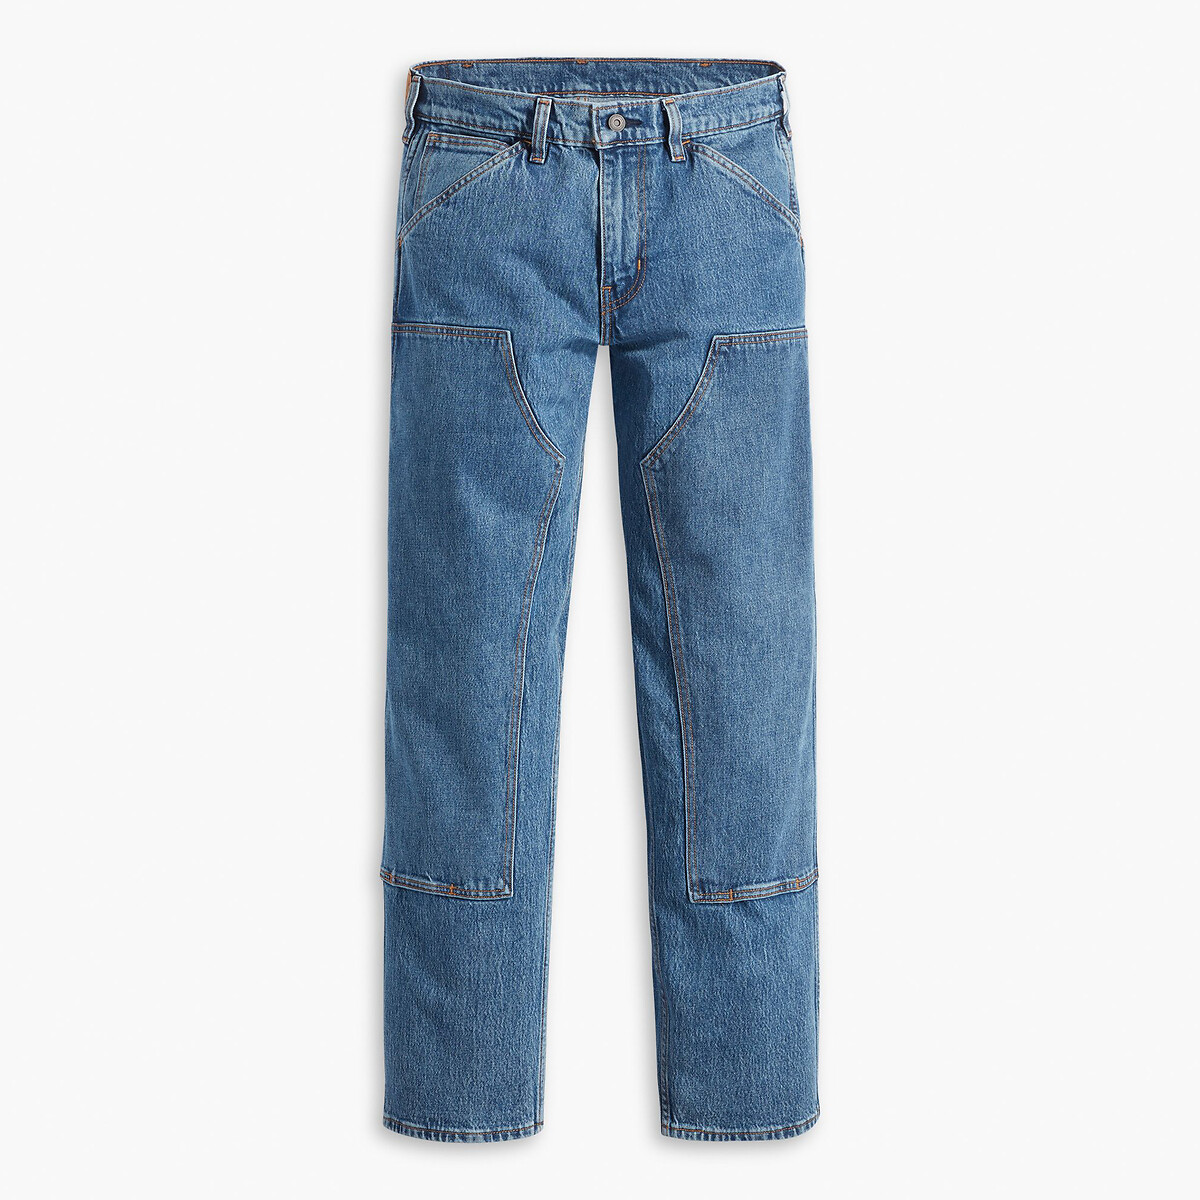 Levi's Jeans timmerman workwear